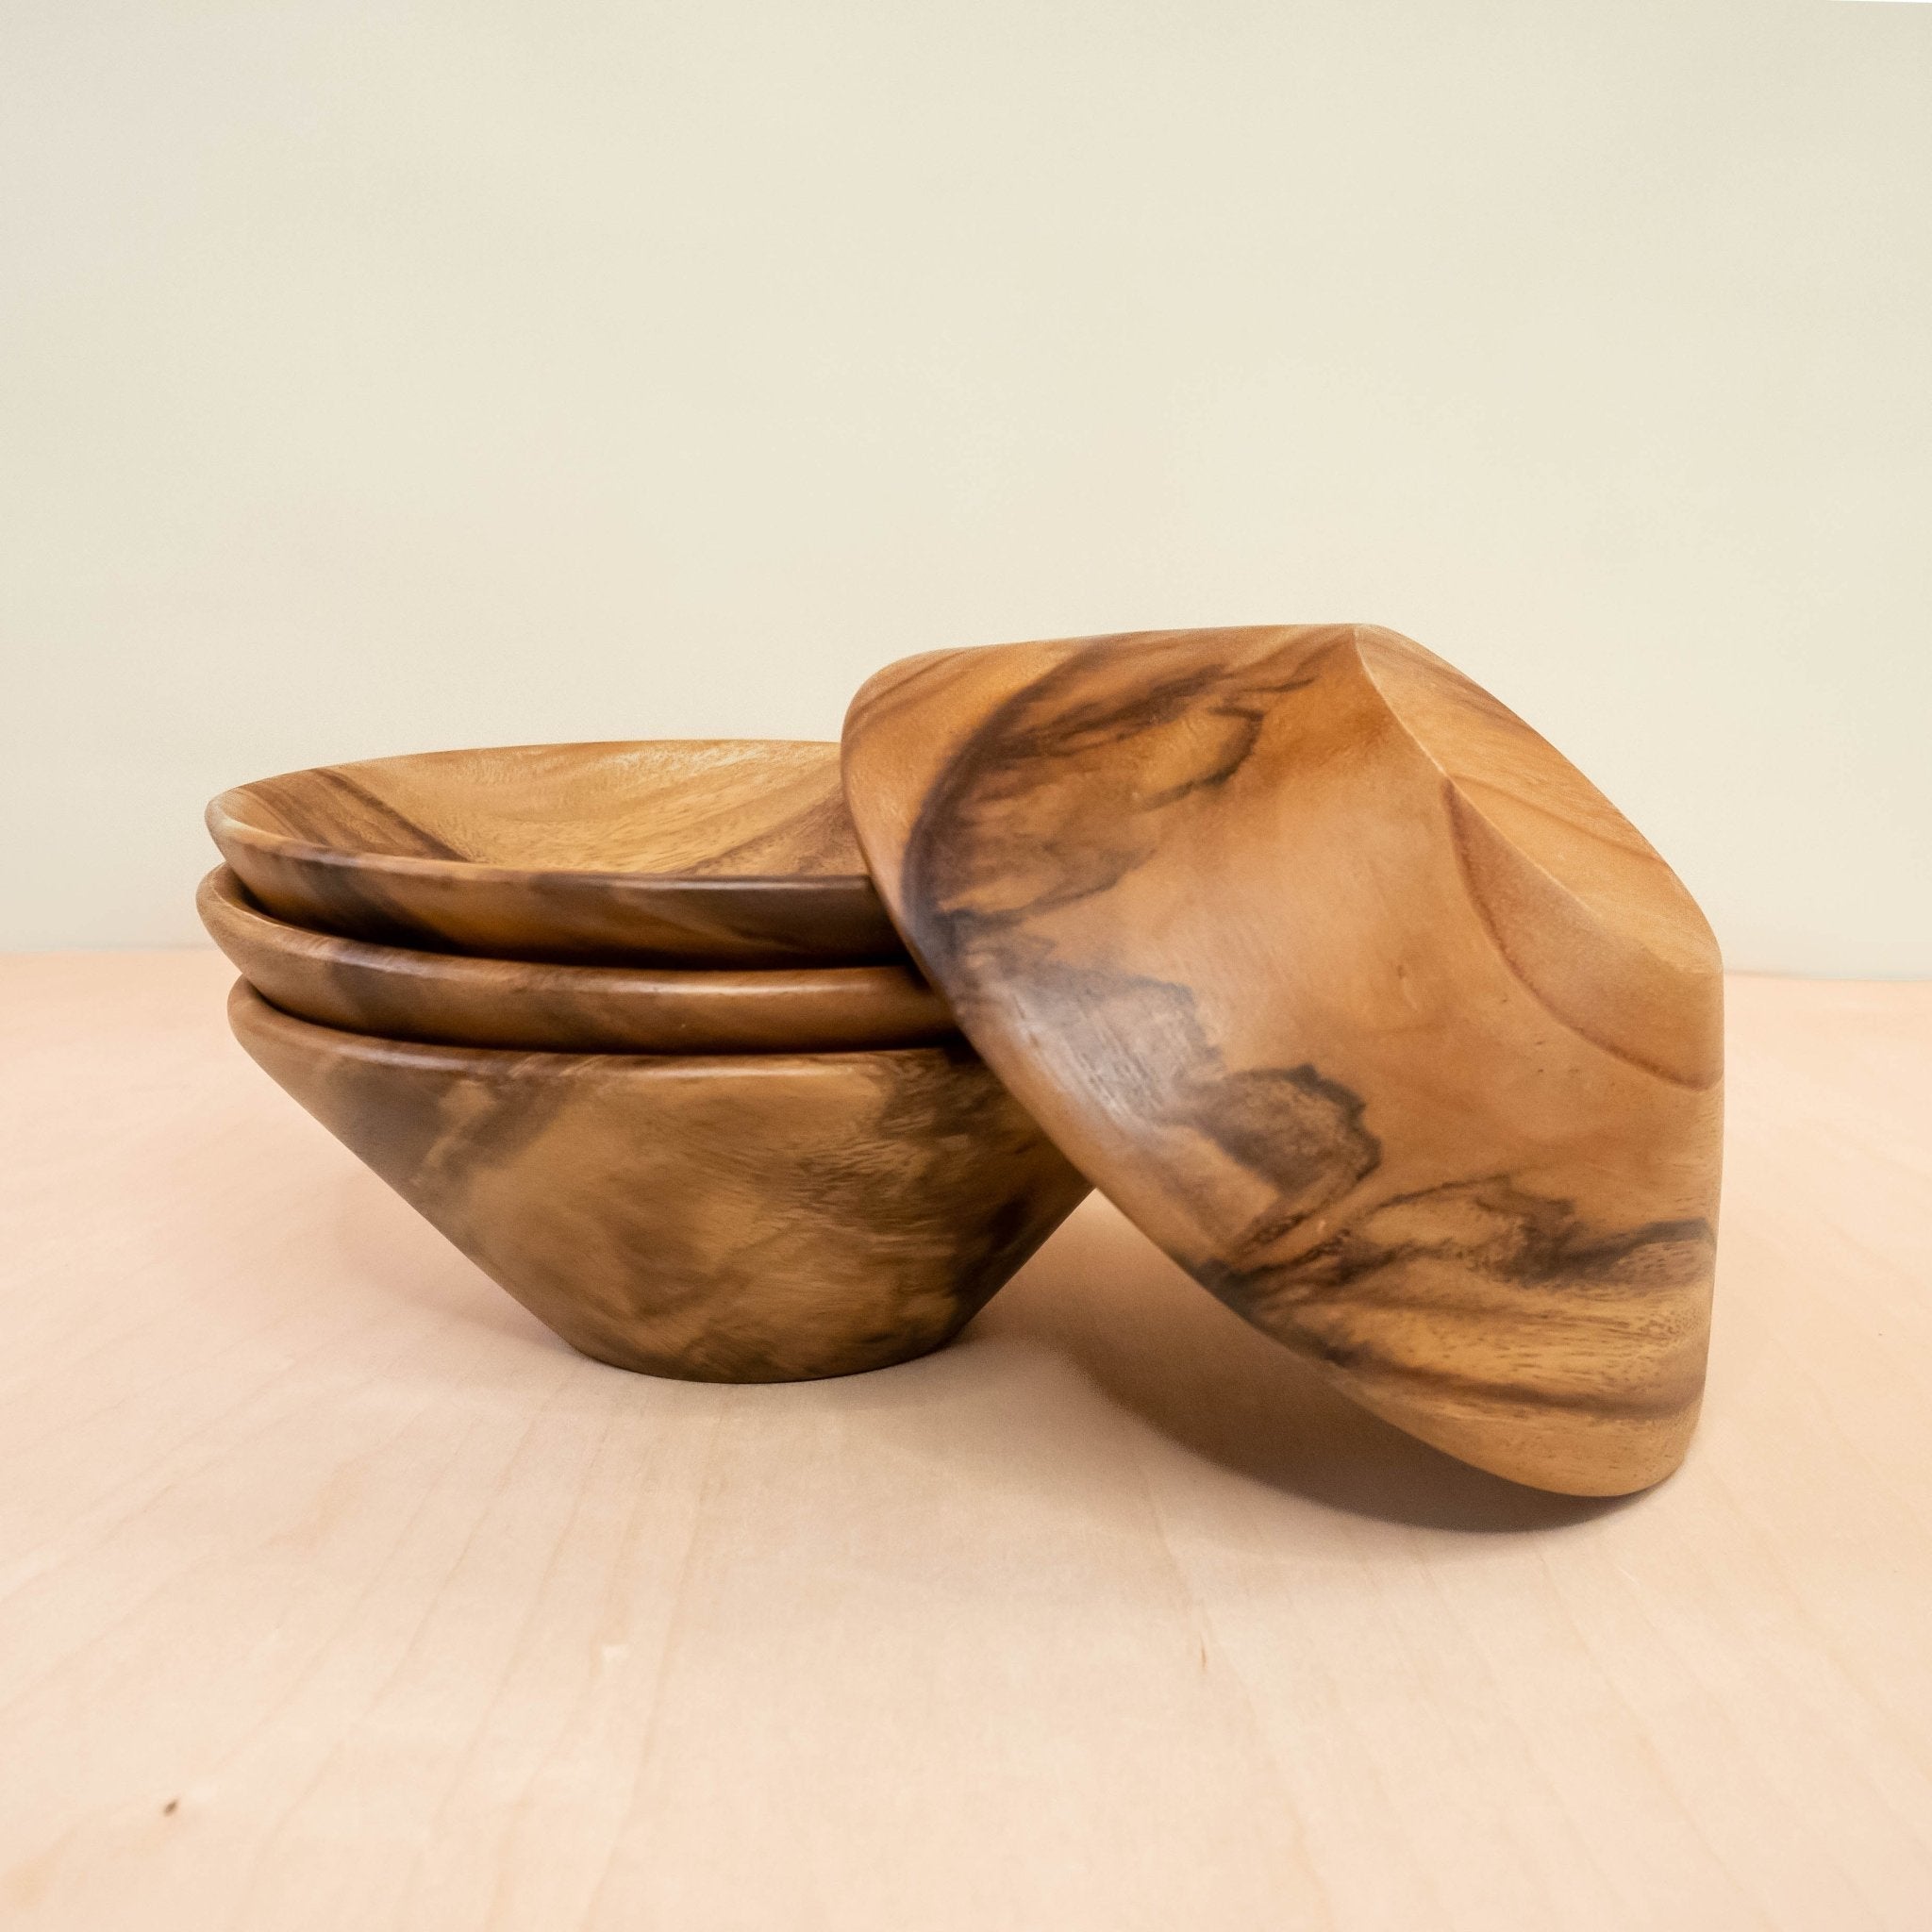 Wooden Ramen Bowl - Acacia | LIKH?